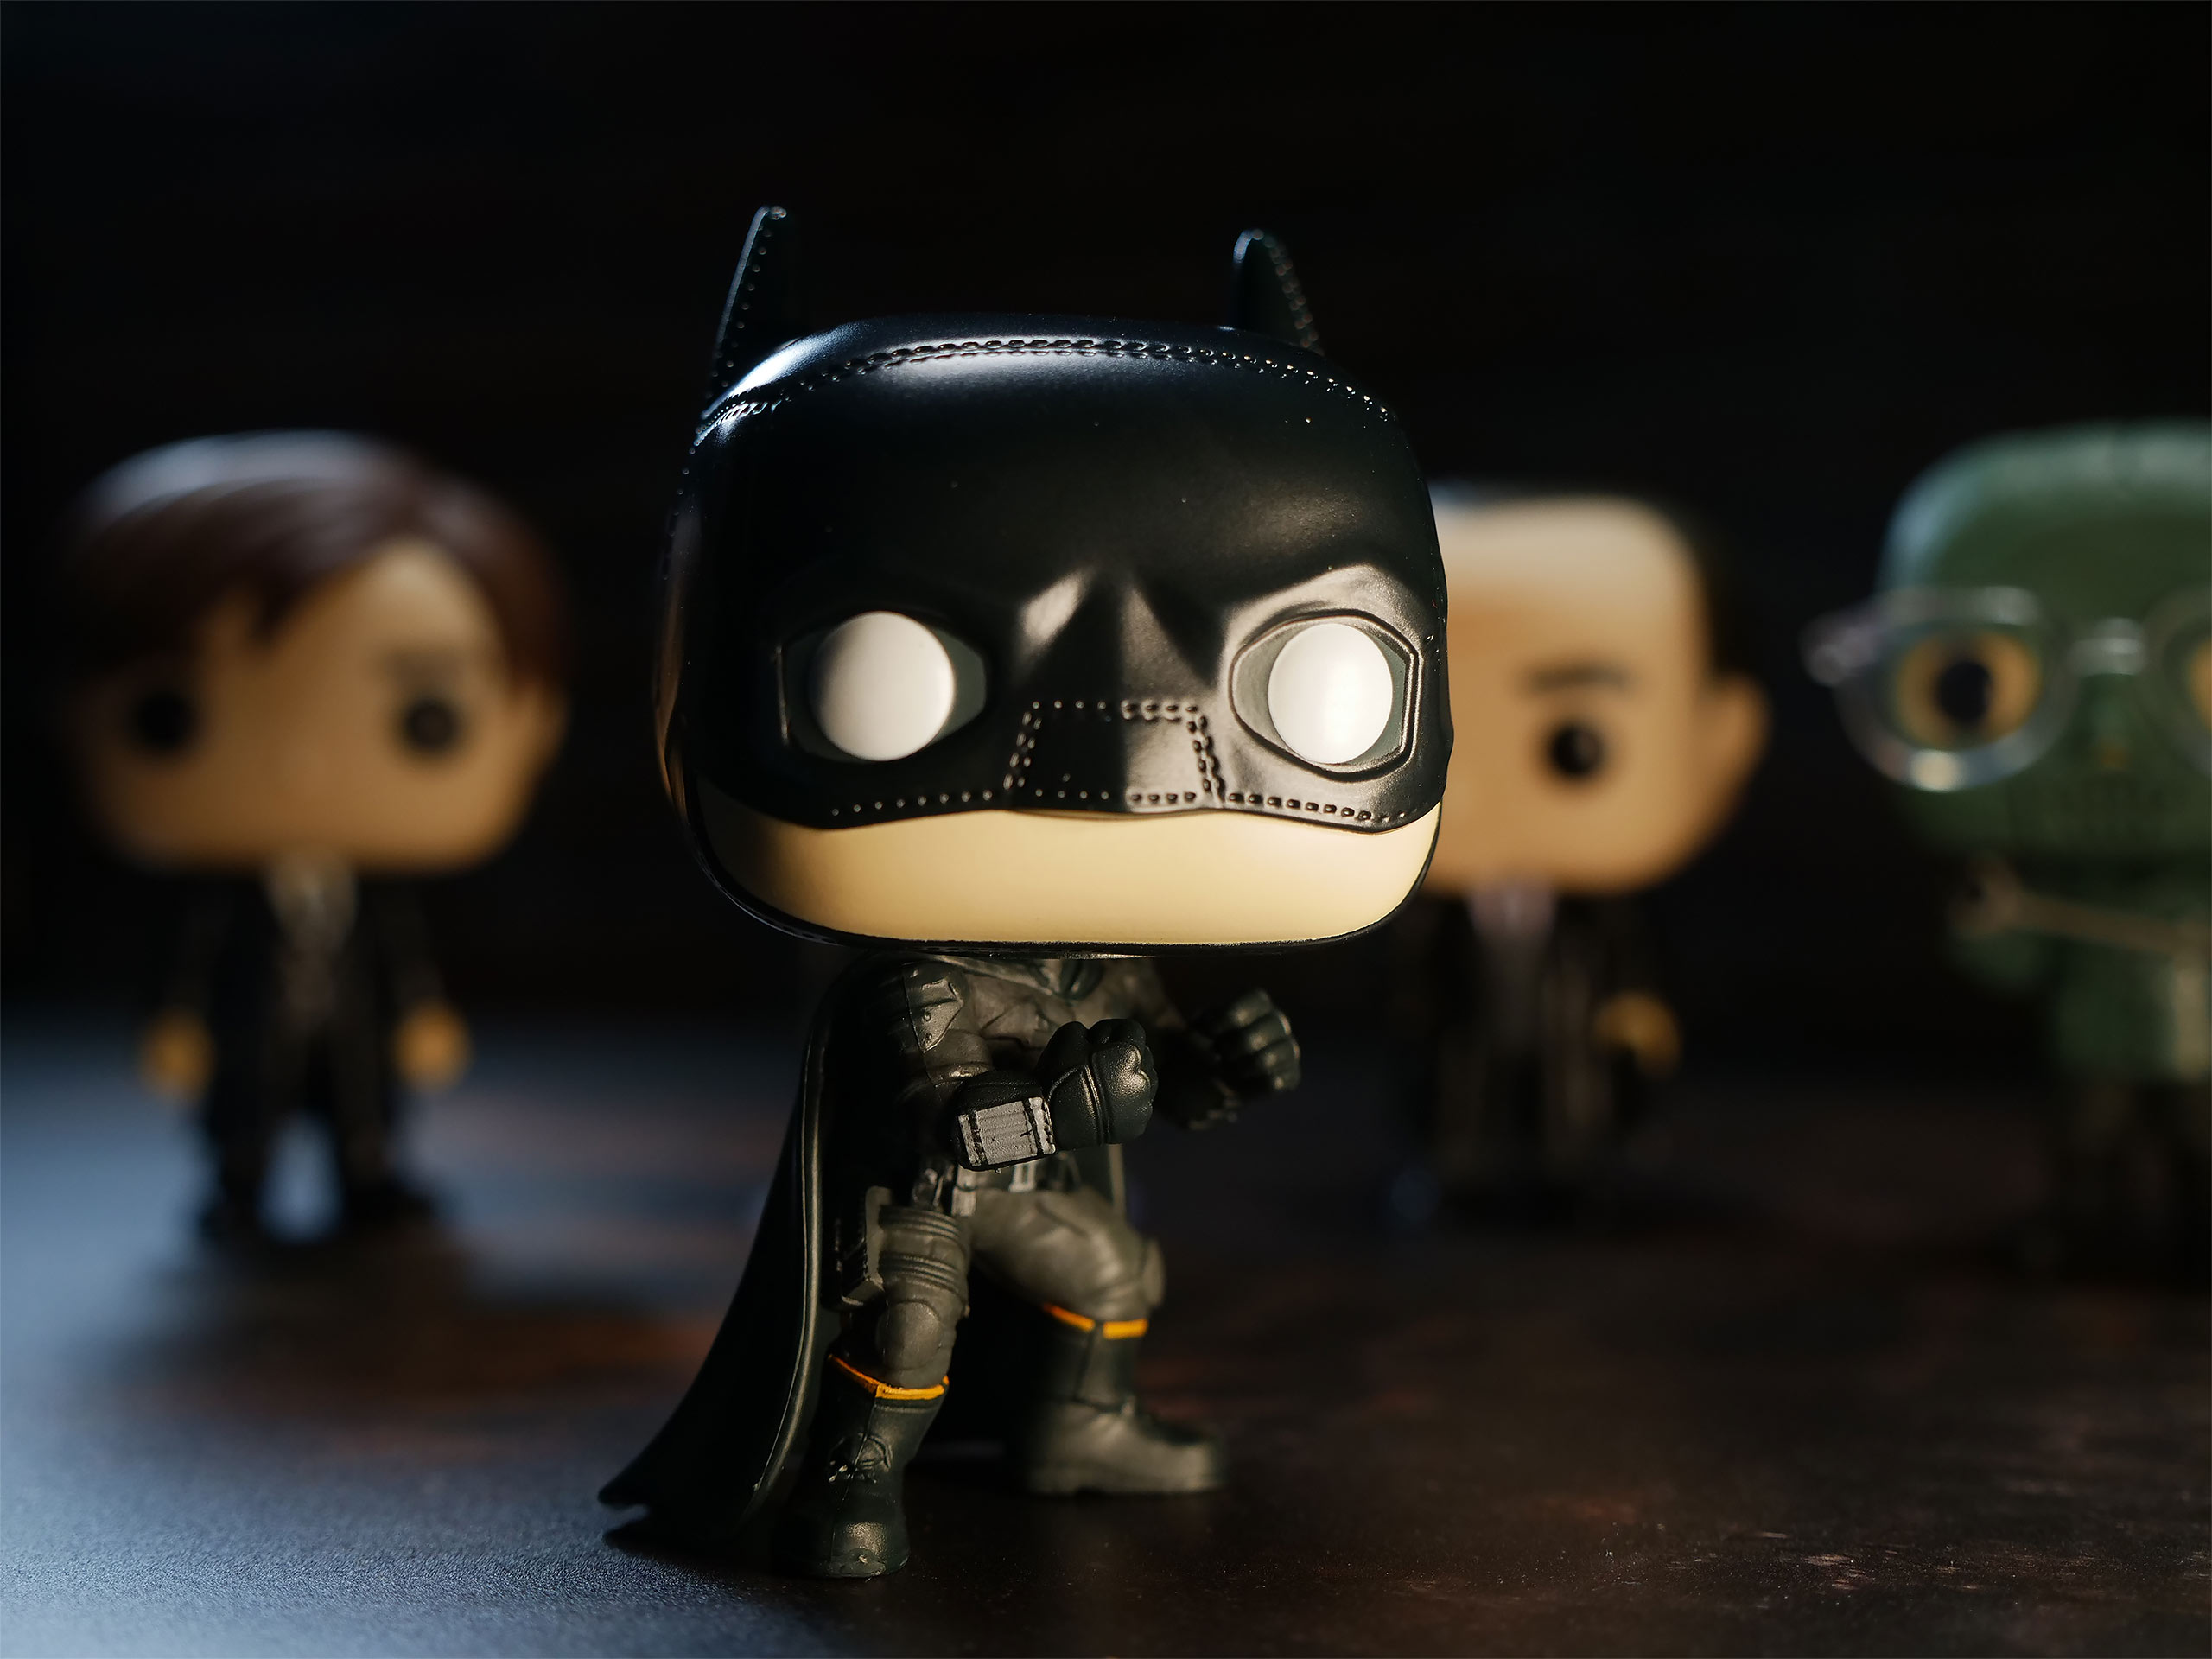 The Batman Funko Pop Figur